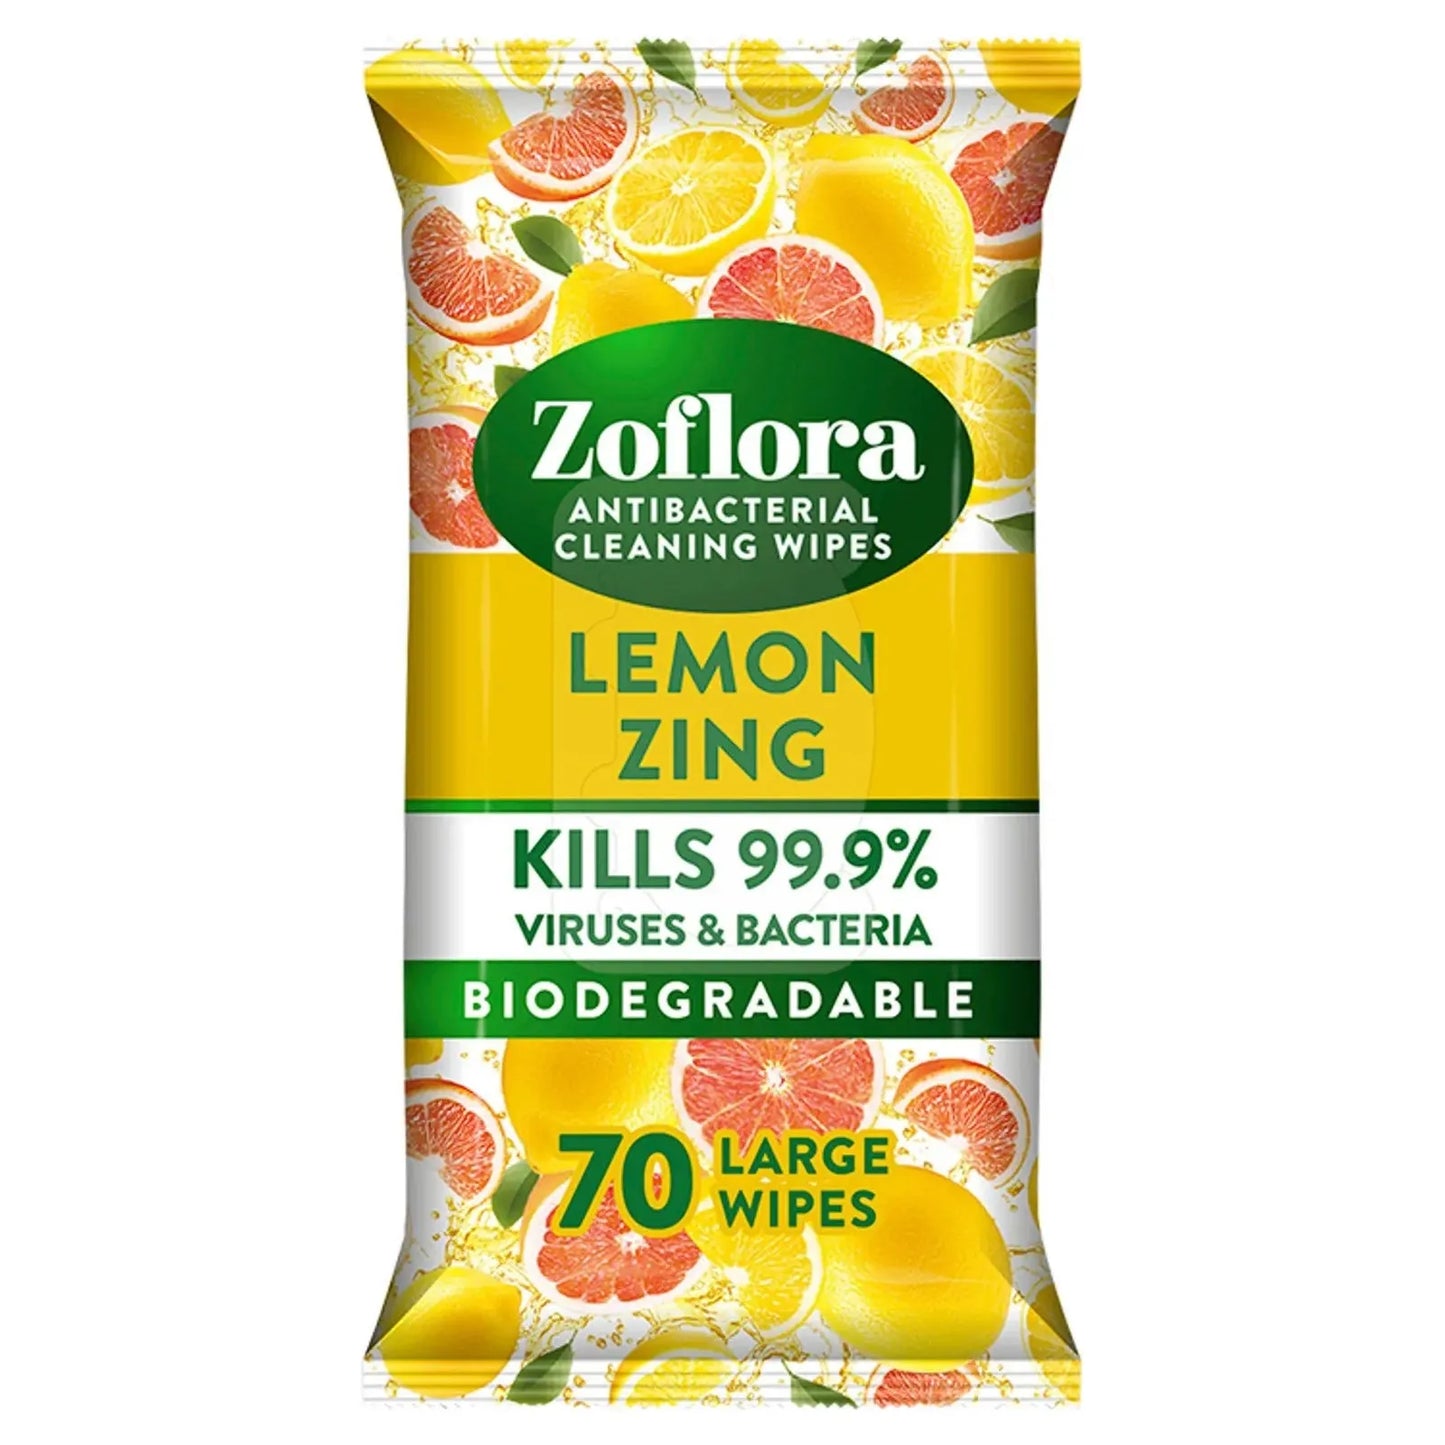 Zoflora Antibacterial Cleaning Wipes, Lemon Zing, 70 Large wipes